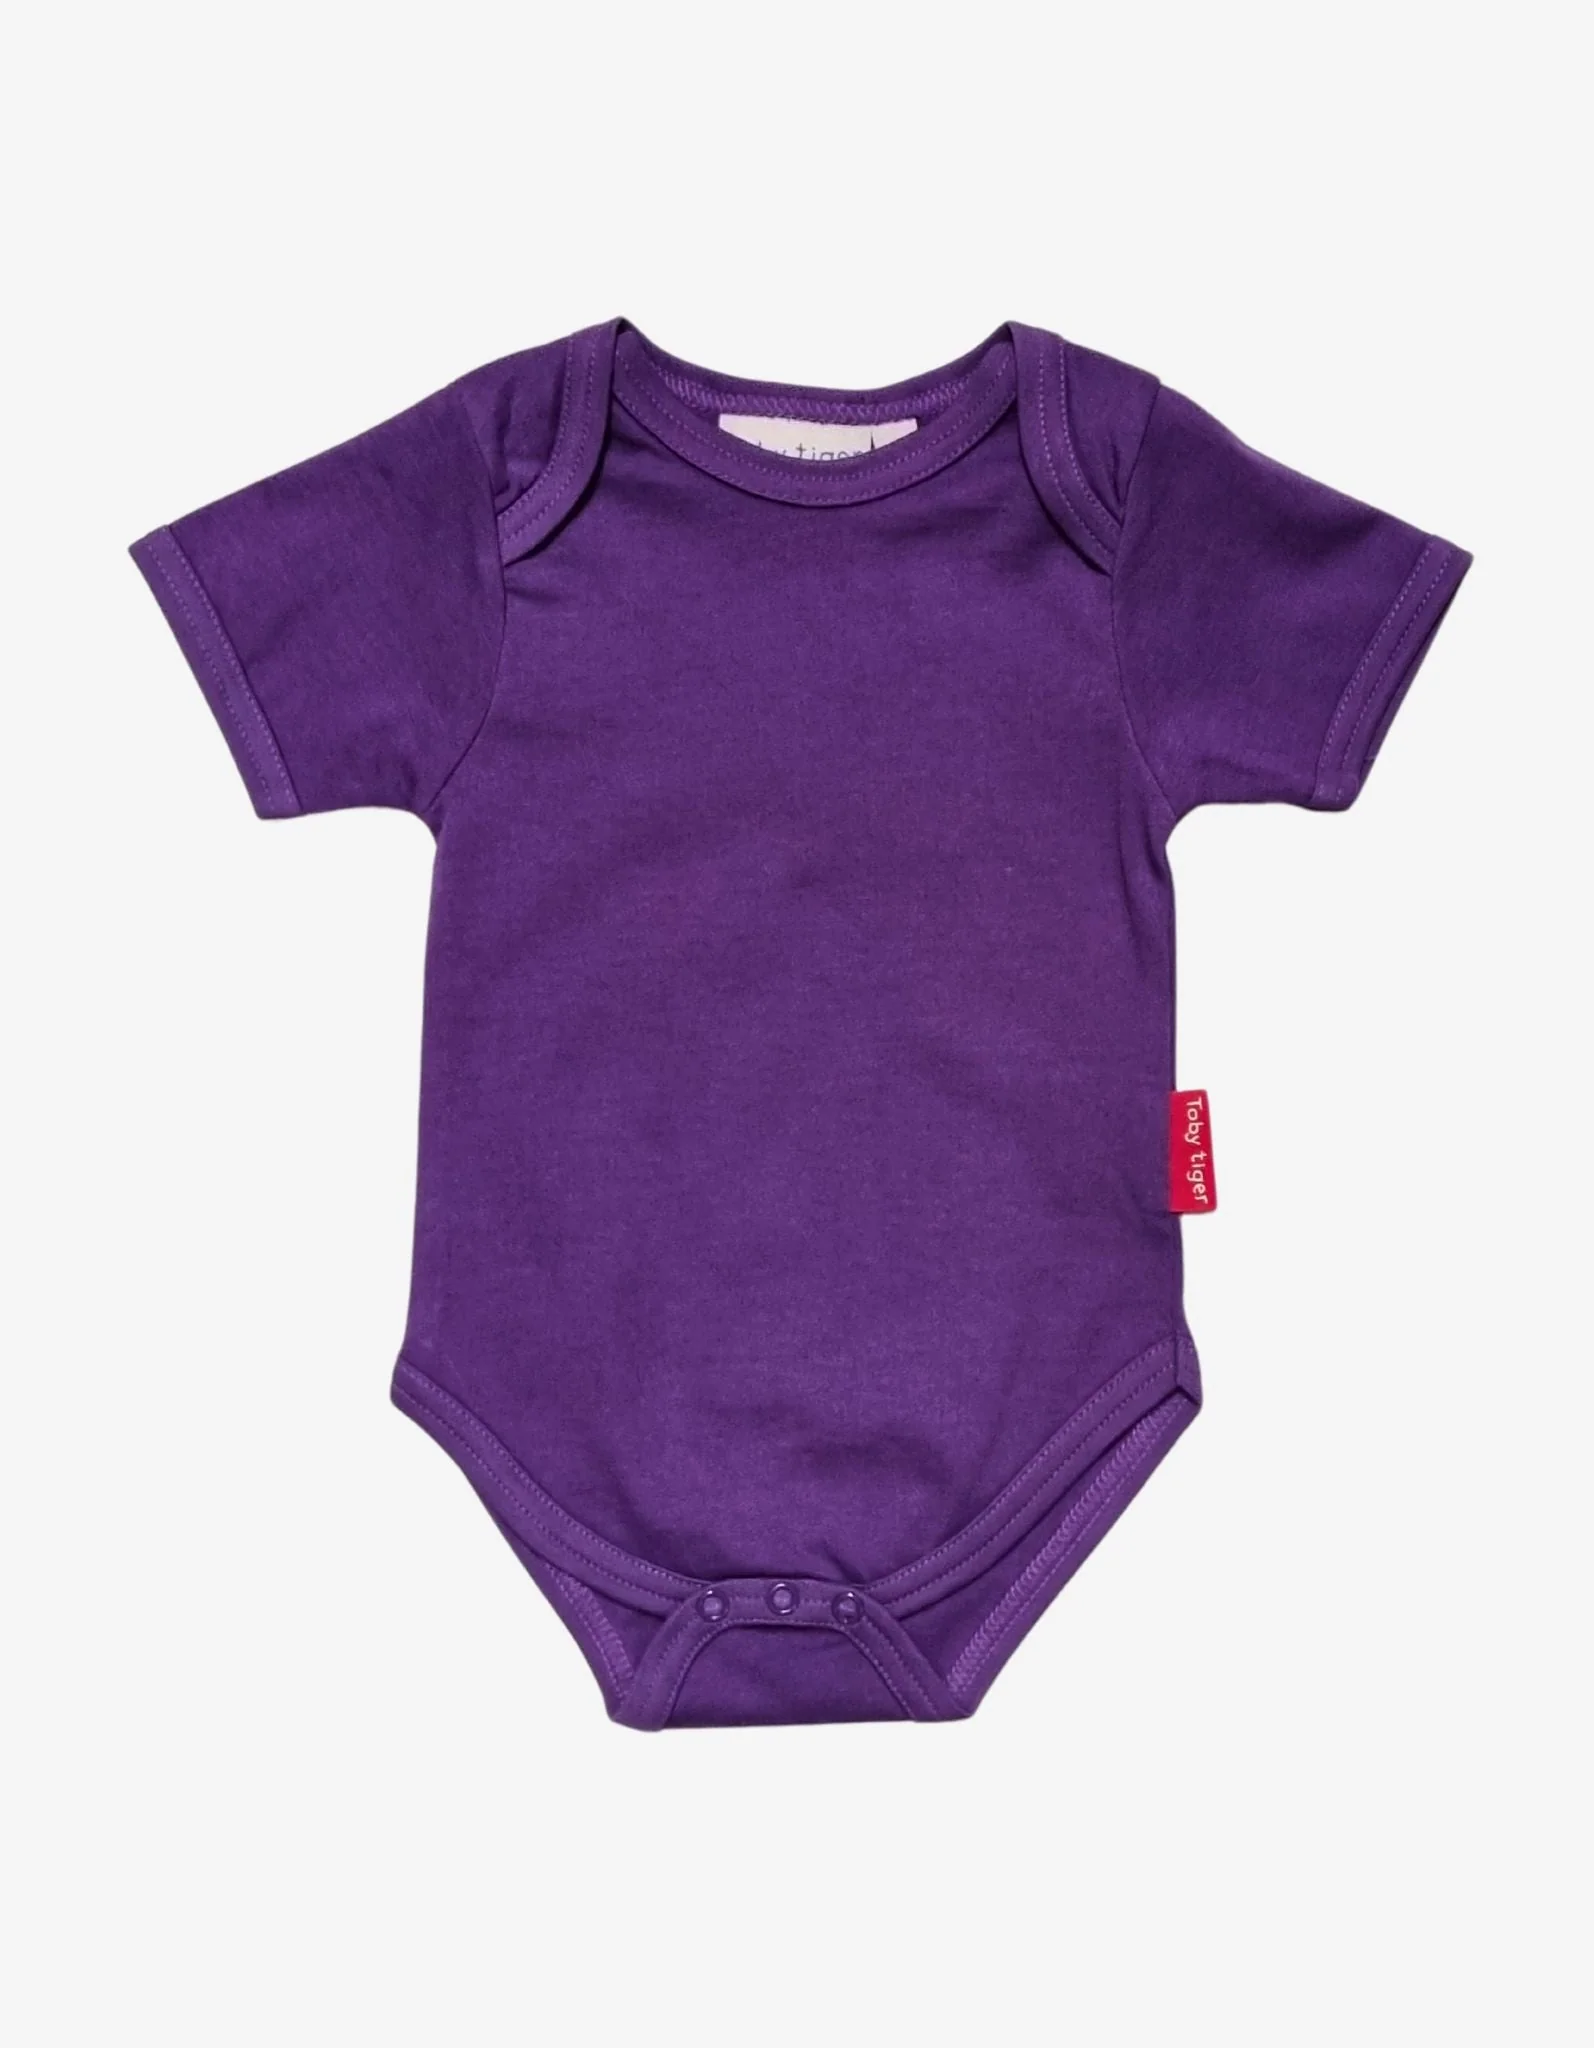 Toby Tiger Organic Purple Basic Short Sleeved Baby Body